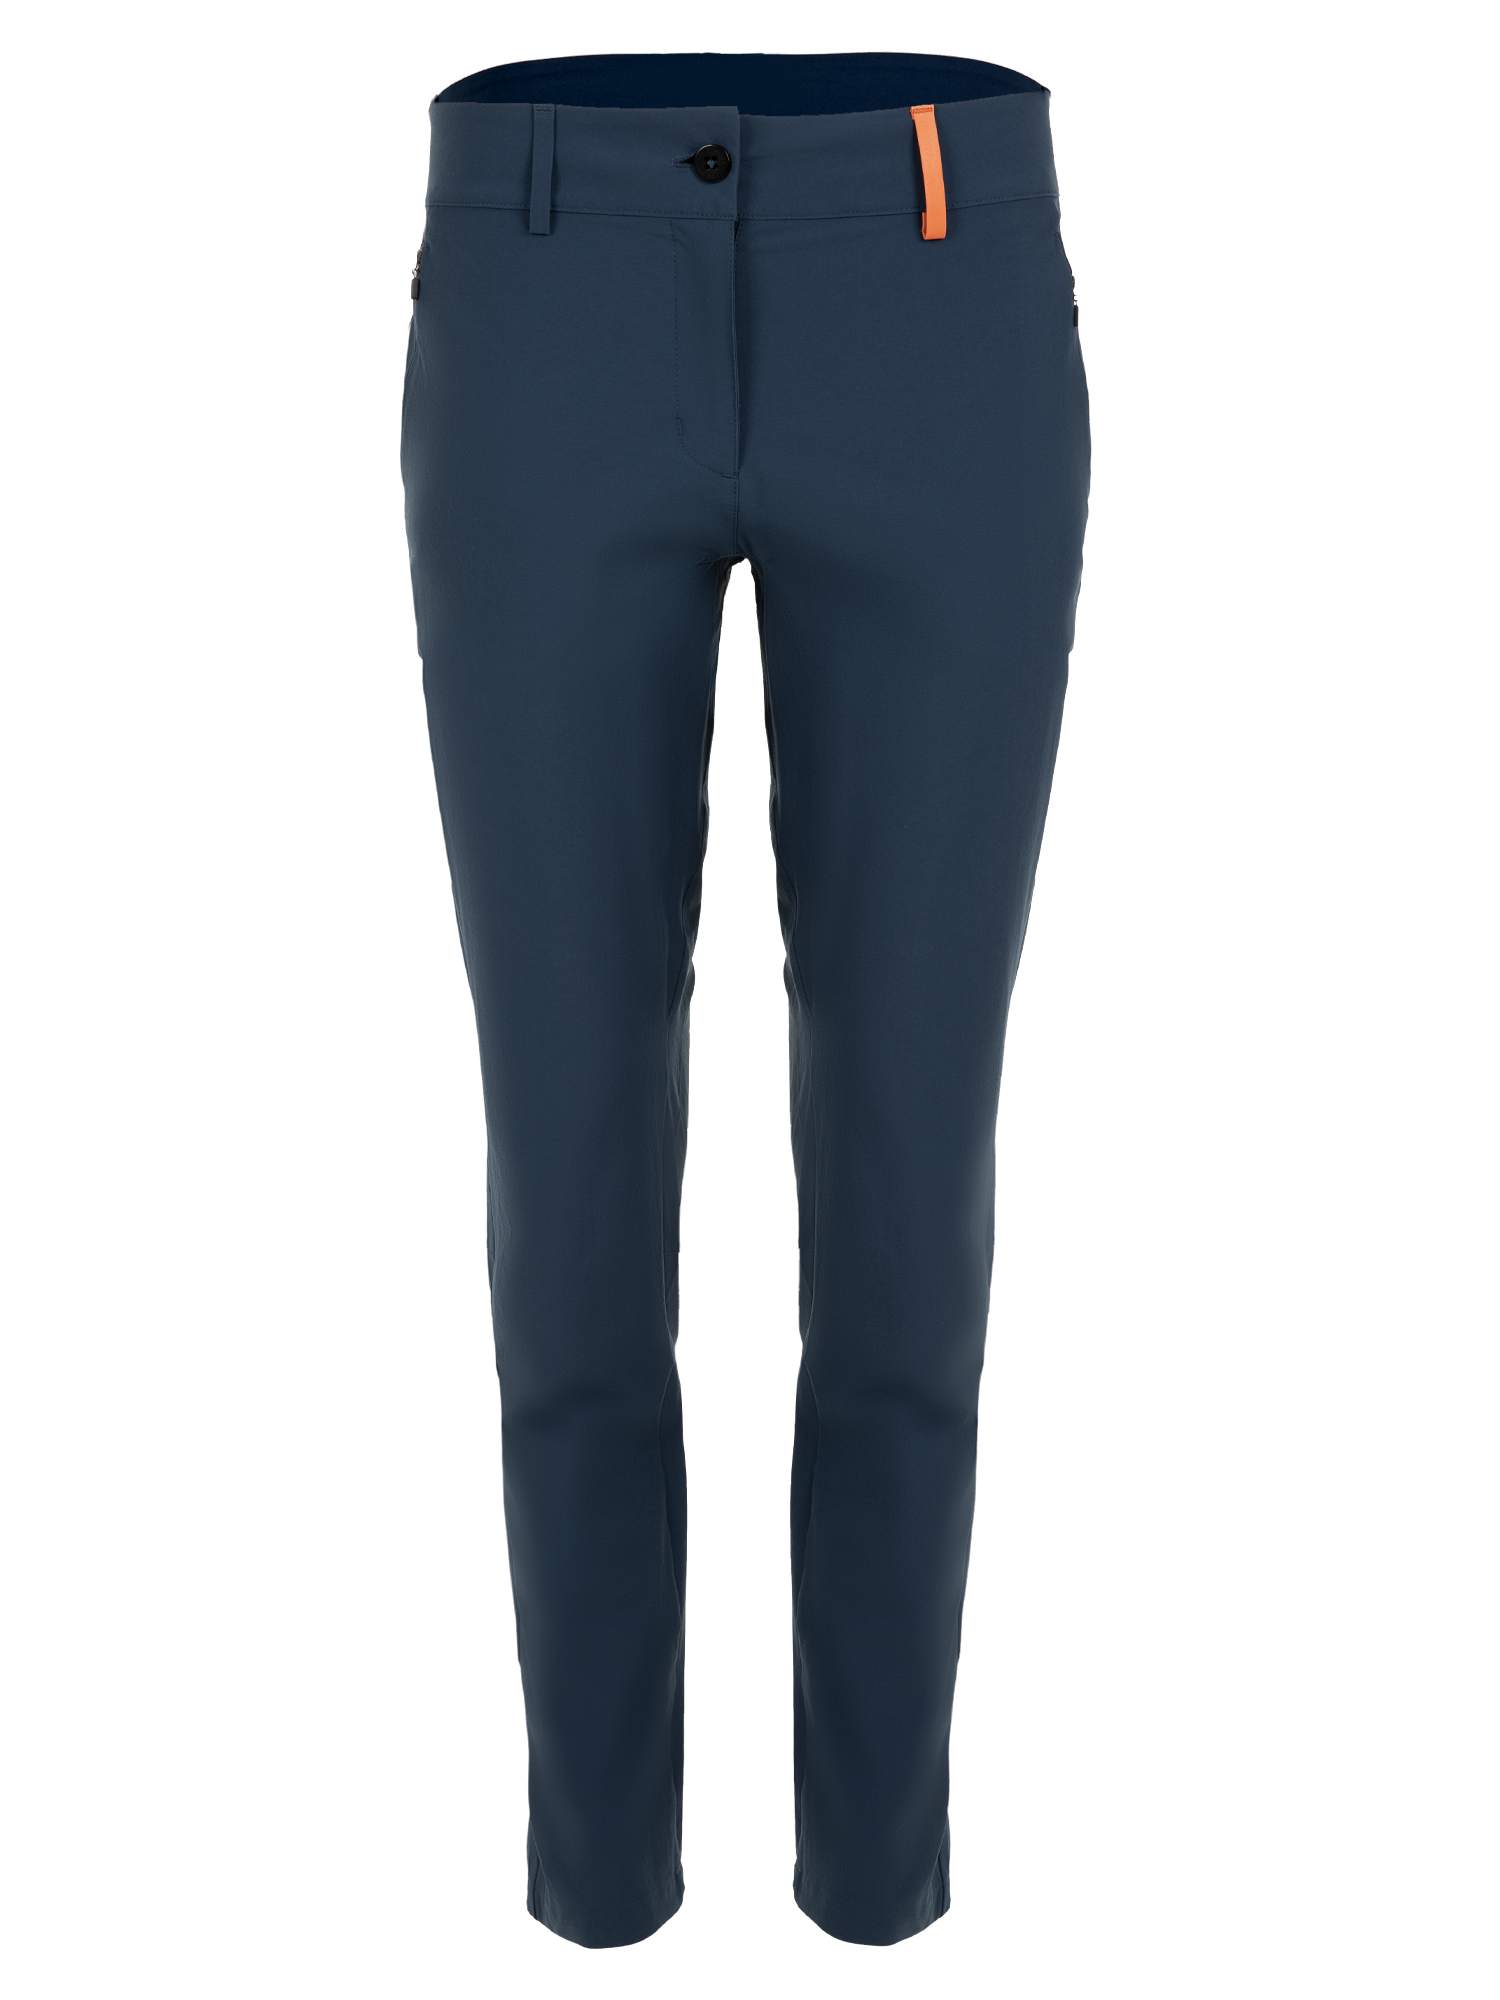 Спортивные брюки женские Ternua Nova Pt W синие L